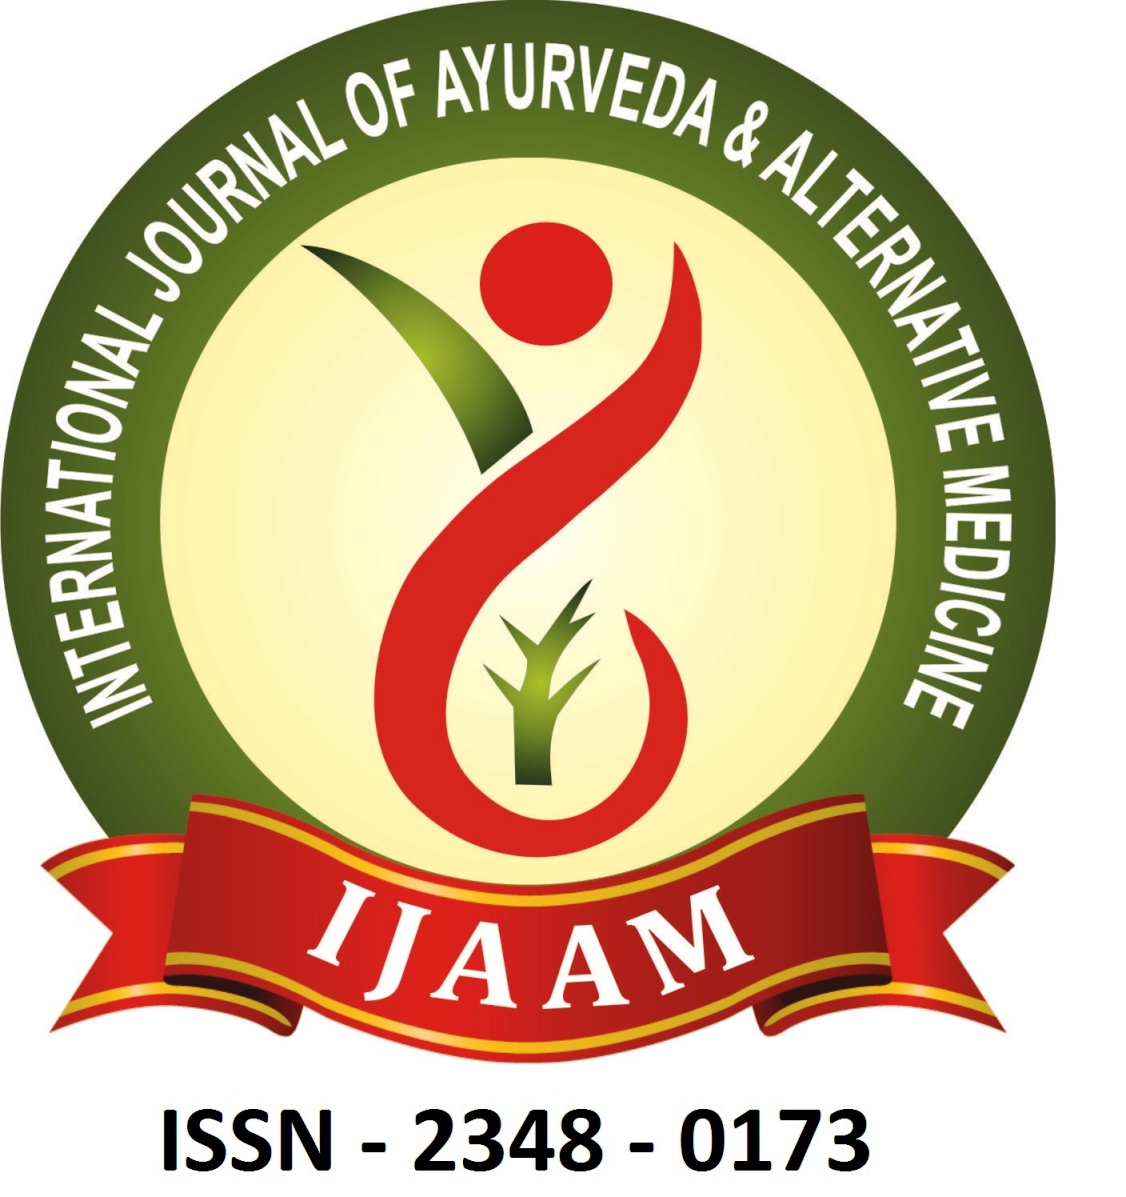 INTERNATIONAL JOURNAL OF AYURVEDA & ALTERNATIVE MEDICINE 